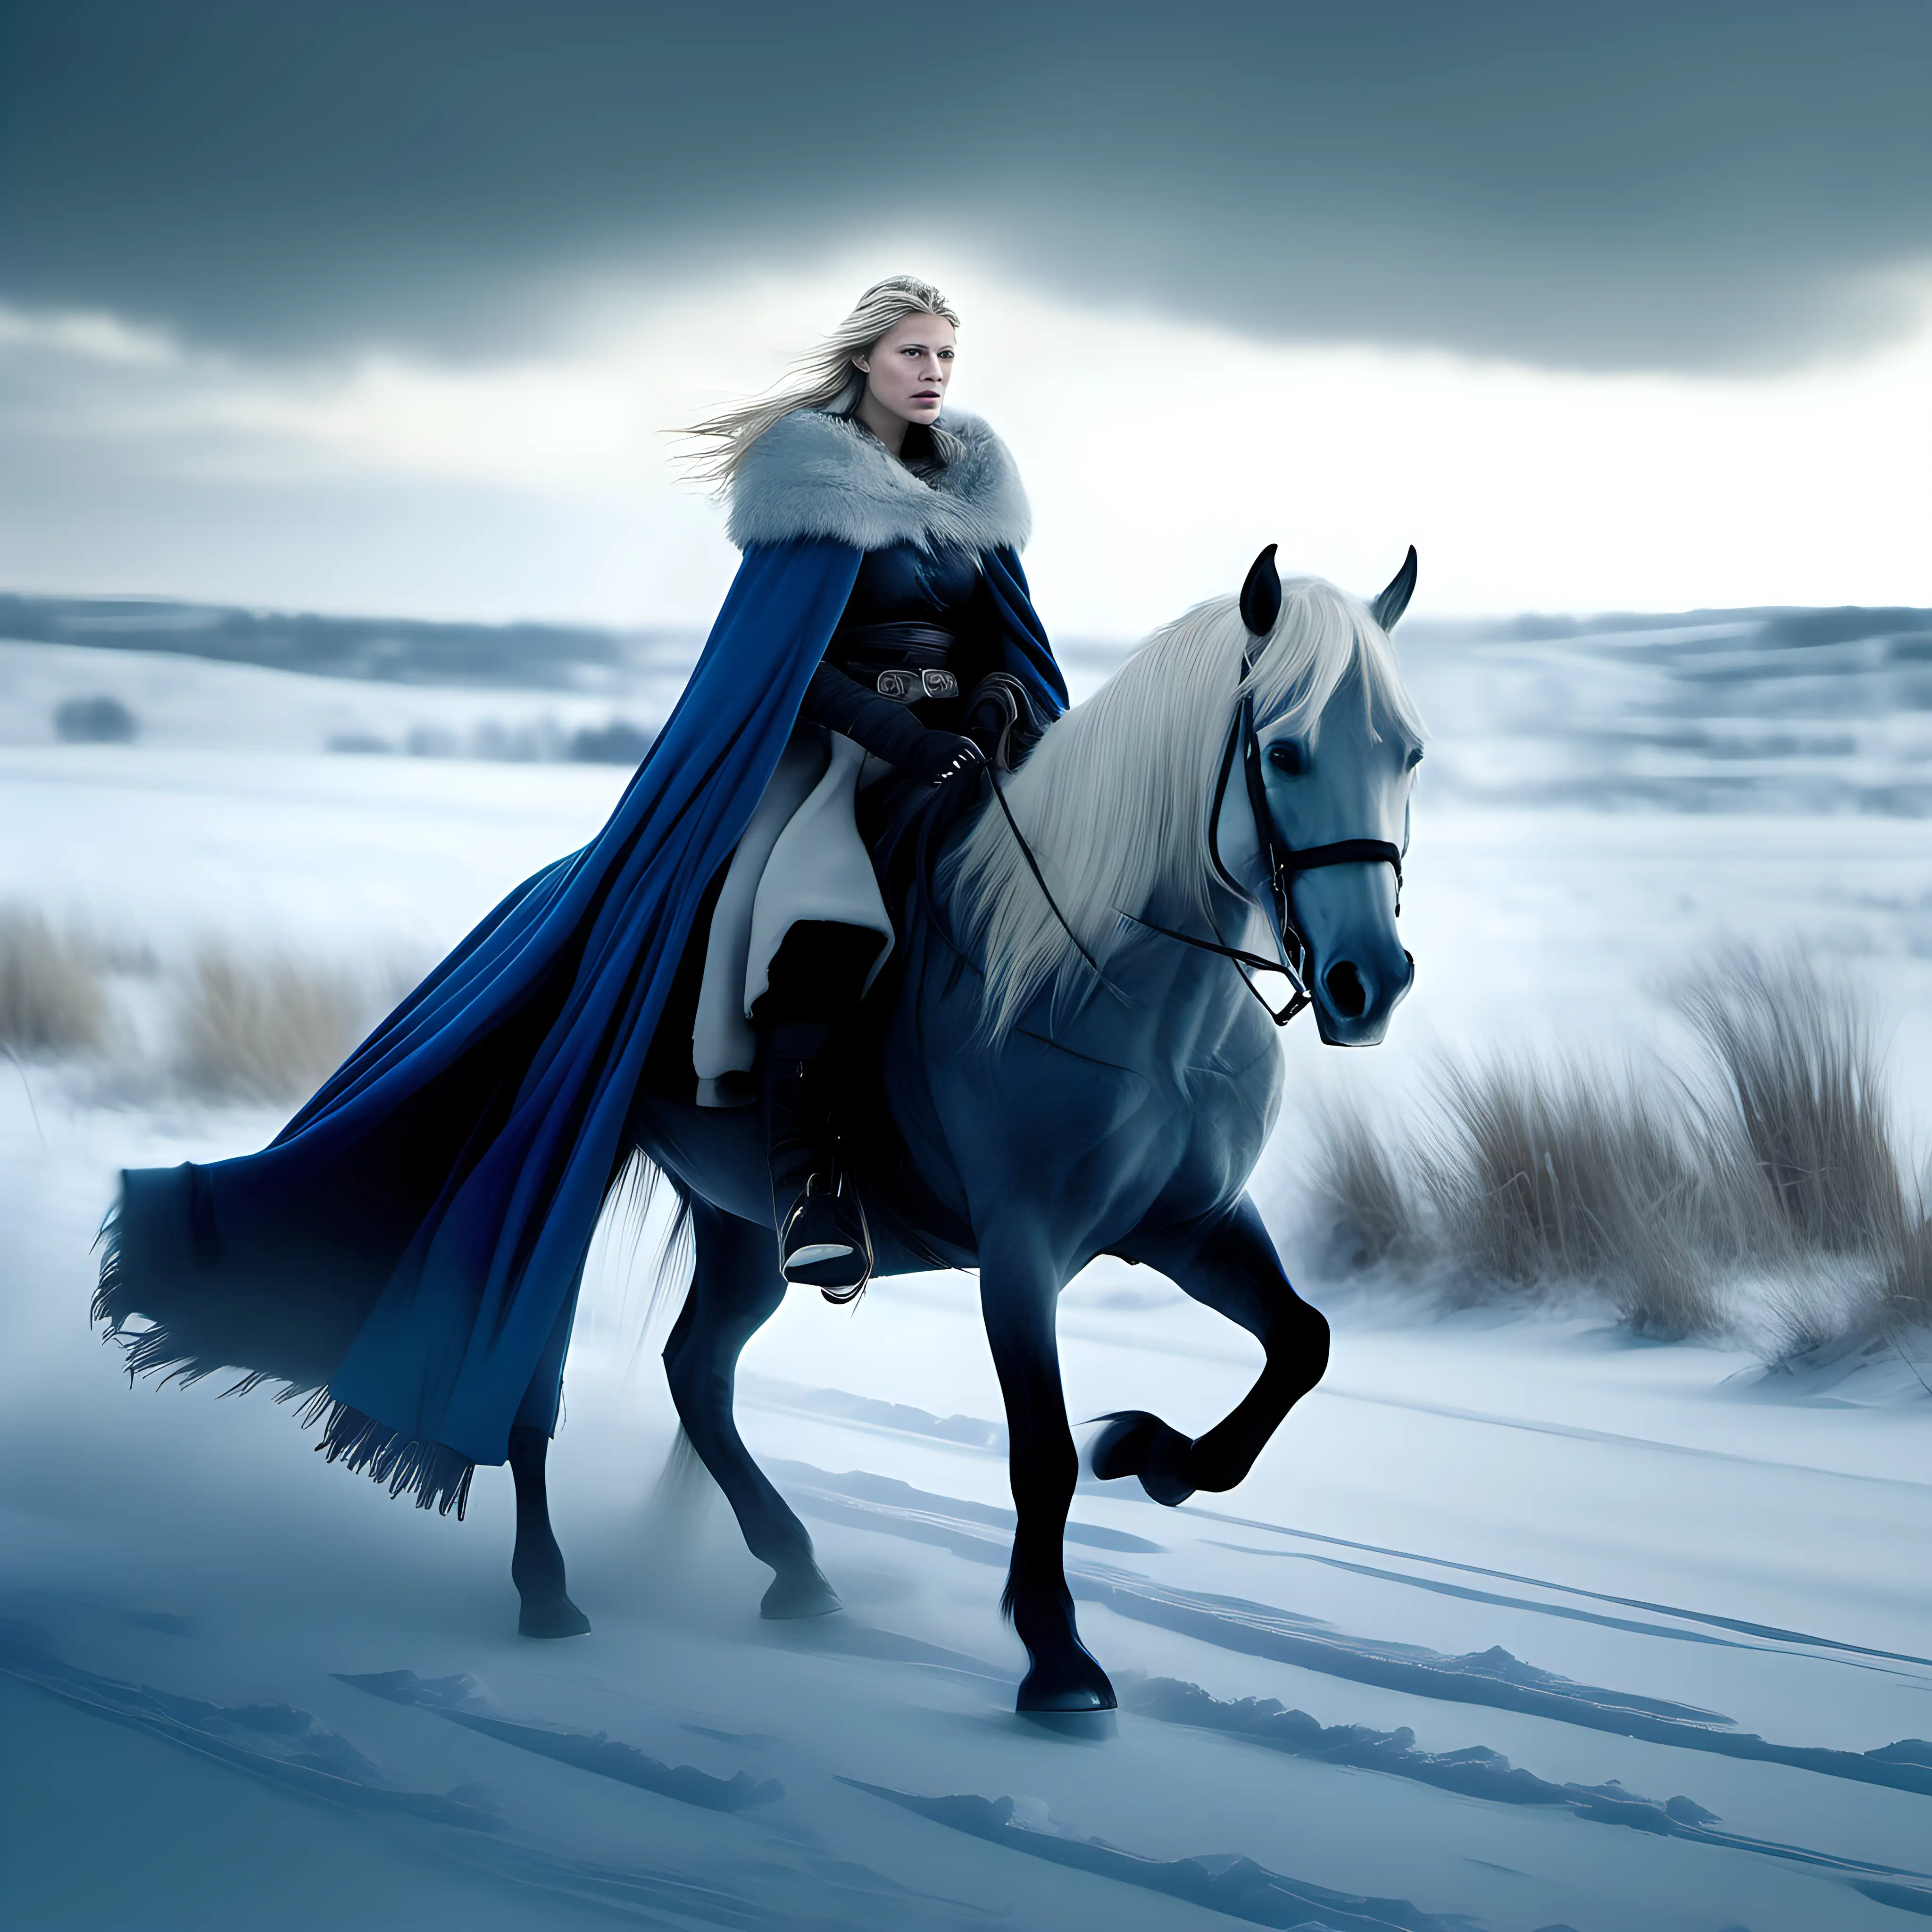 Blond Viking Woman Riding Black Horse in Winter Landscape